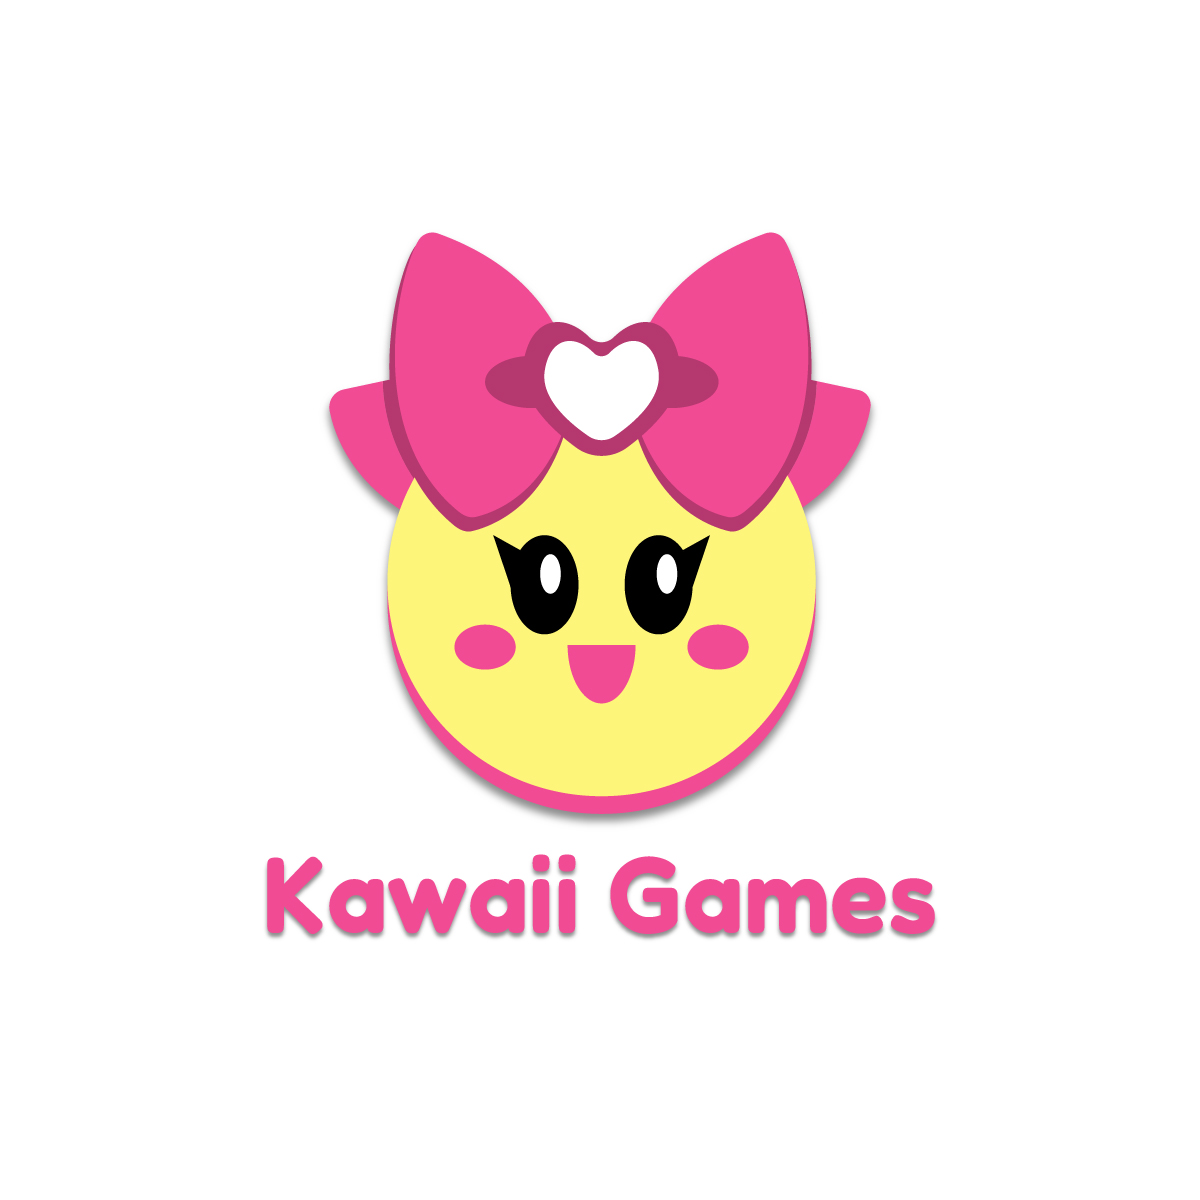 New Kawaii Games Logo